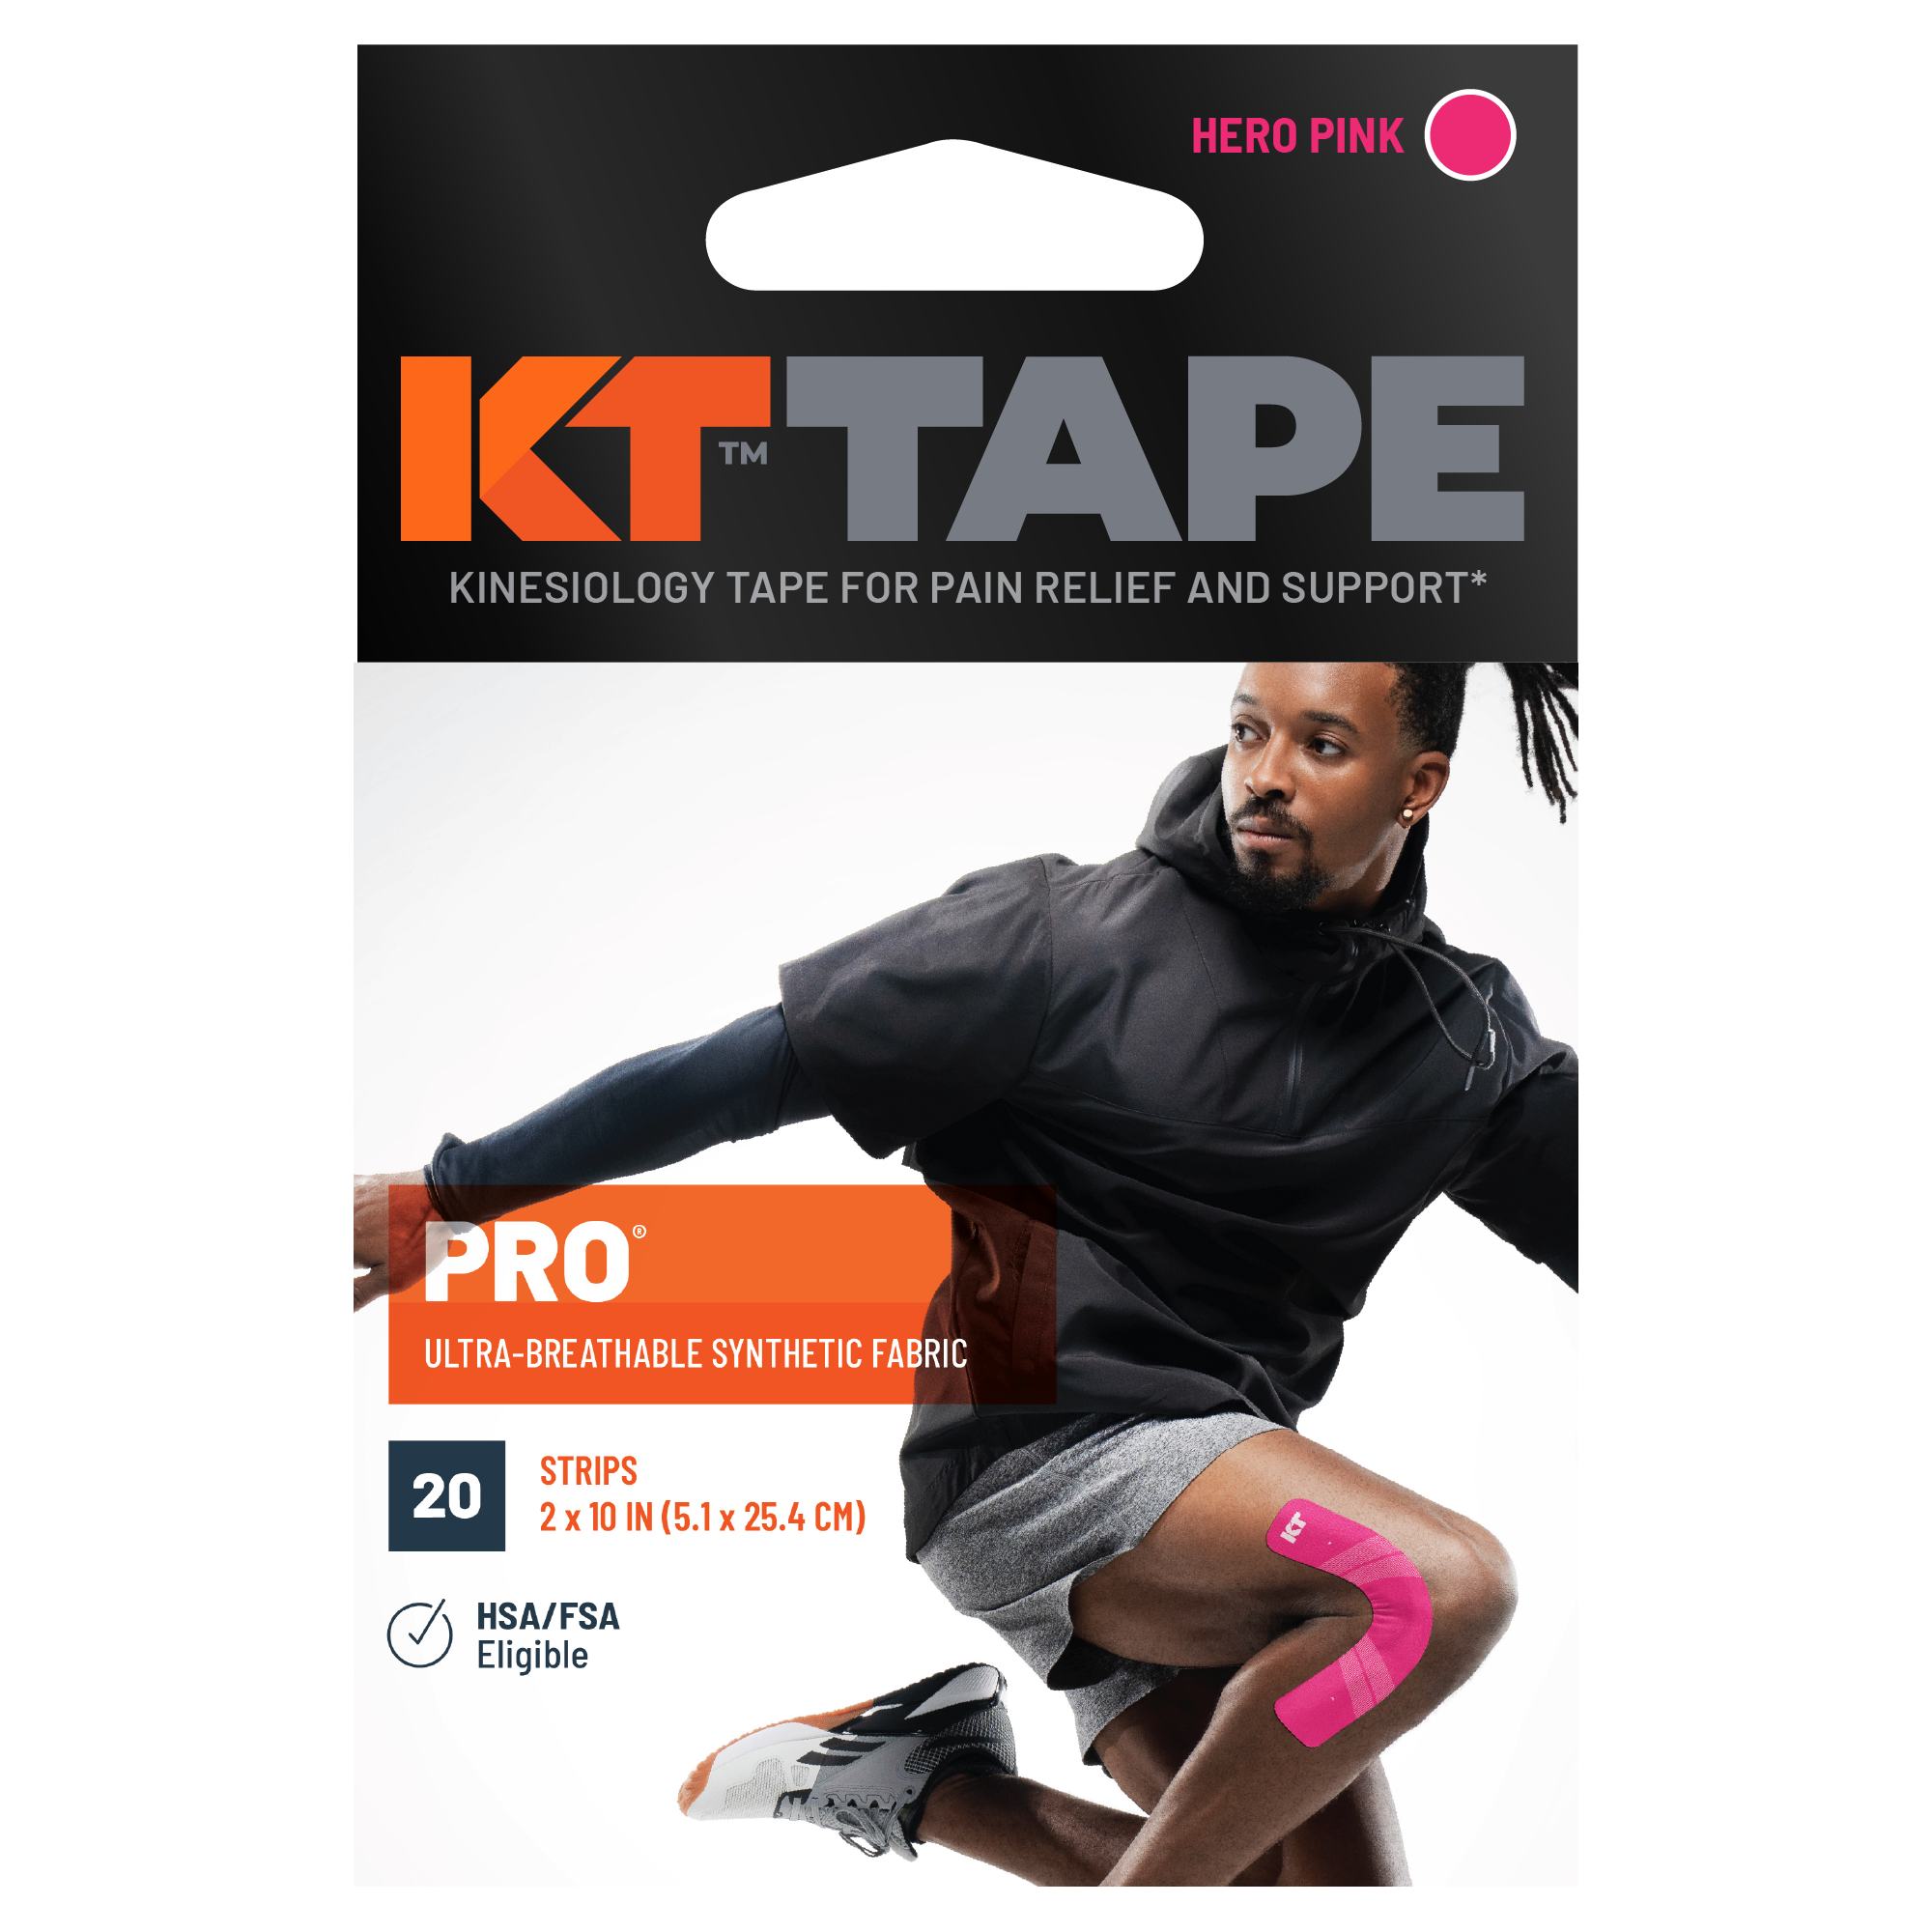 KT Tape Pro packaging#color_hero-pink